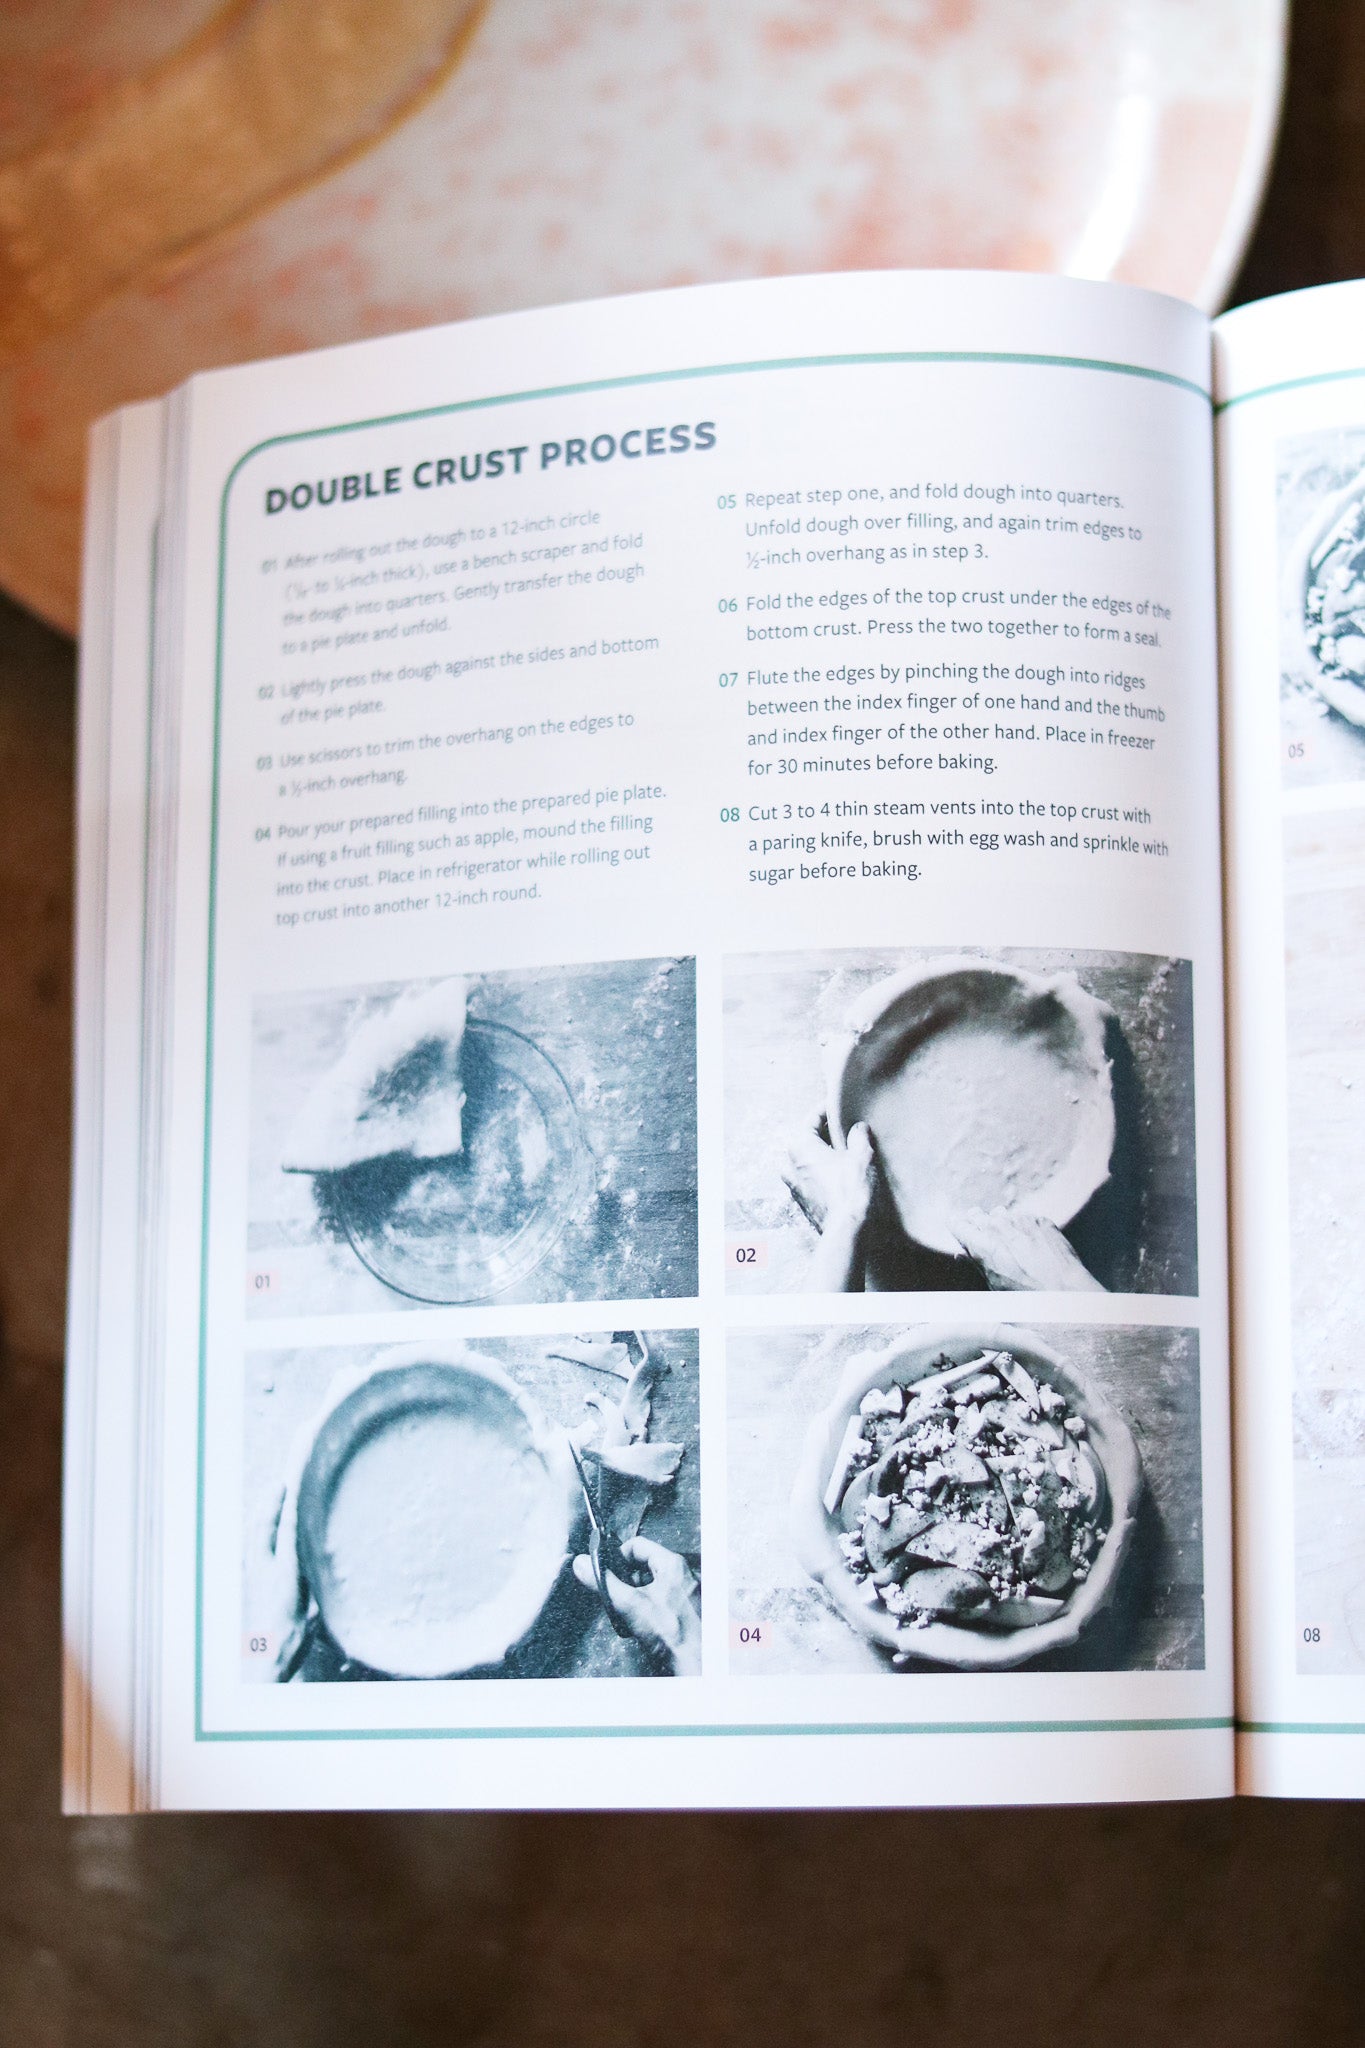 Ovenly Cookbook